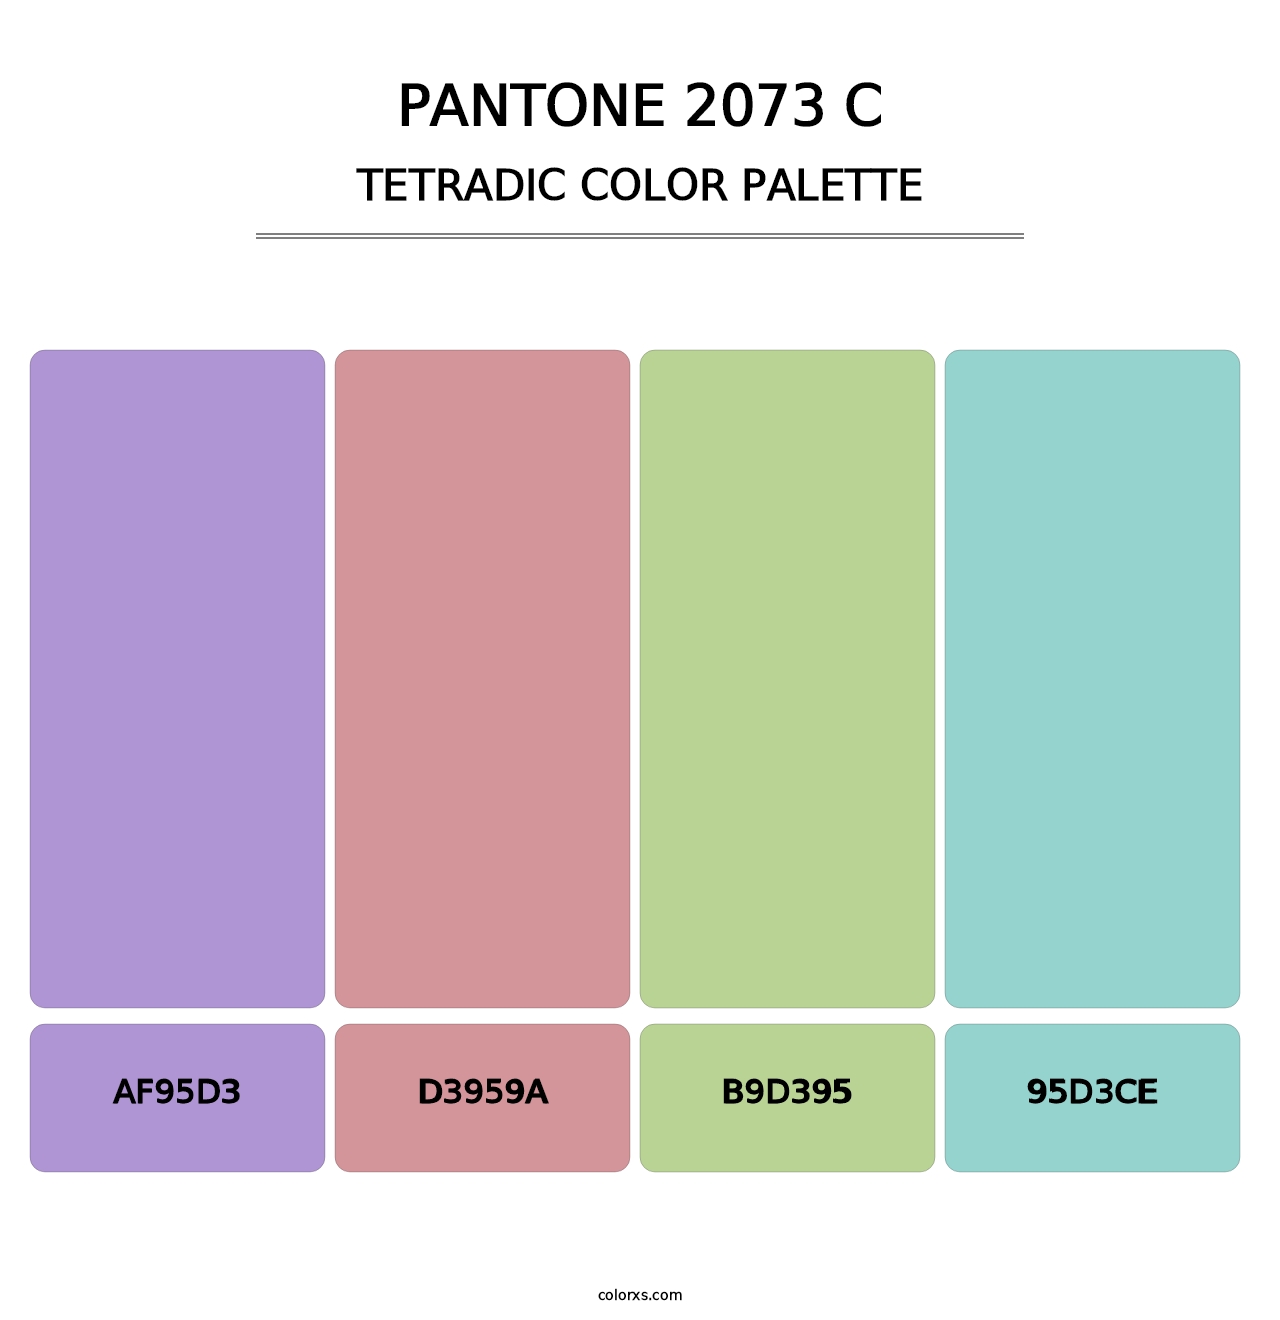 PANTONE 2073 C - Tetradic Color Palette